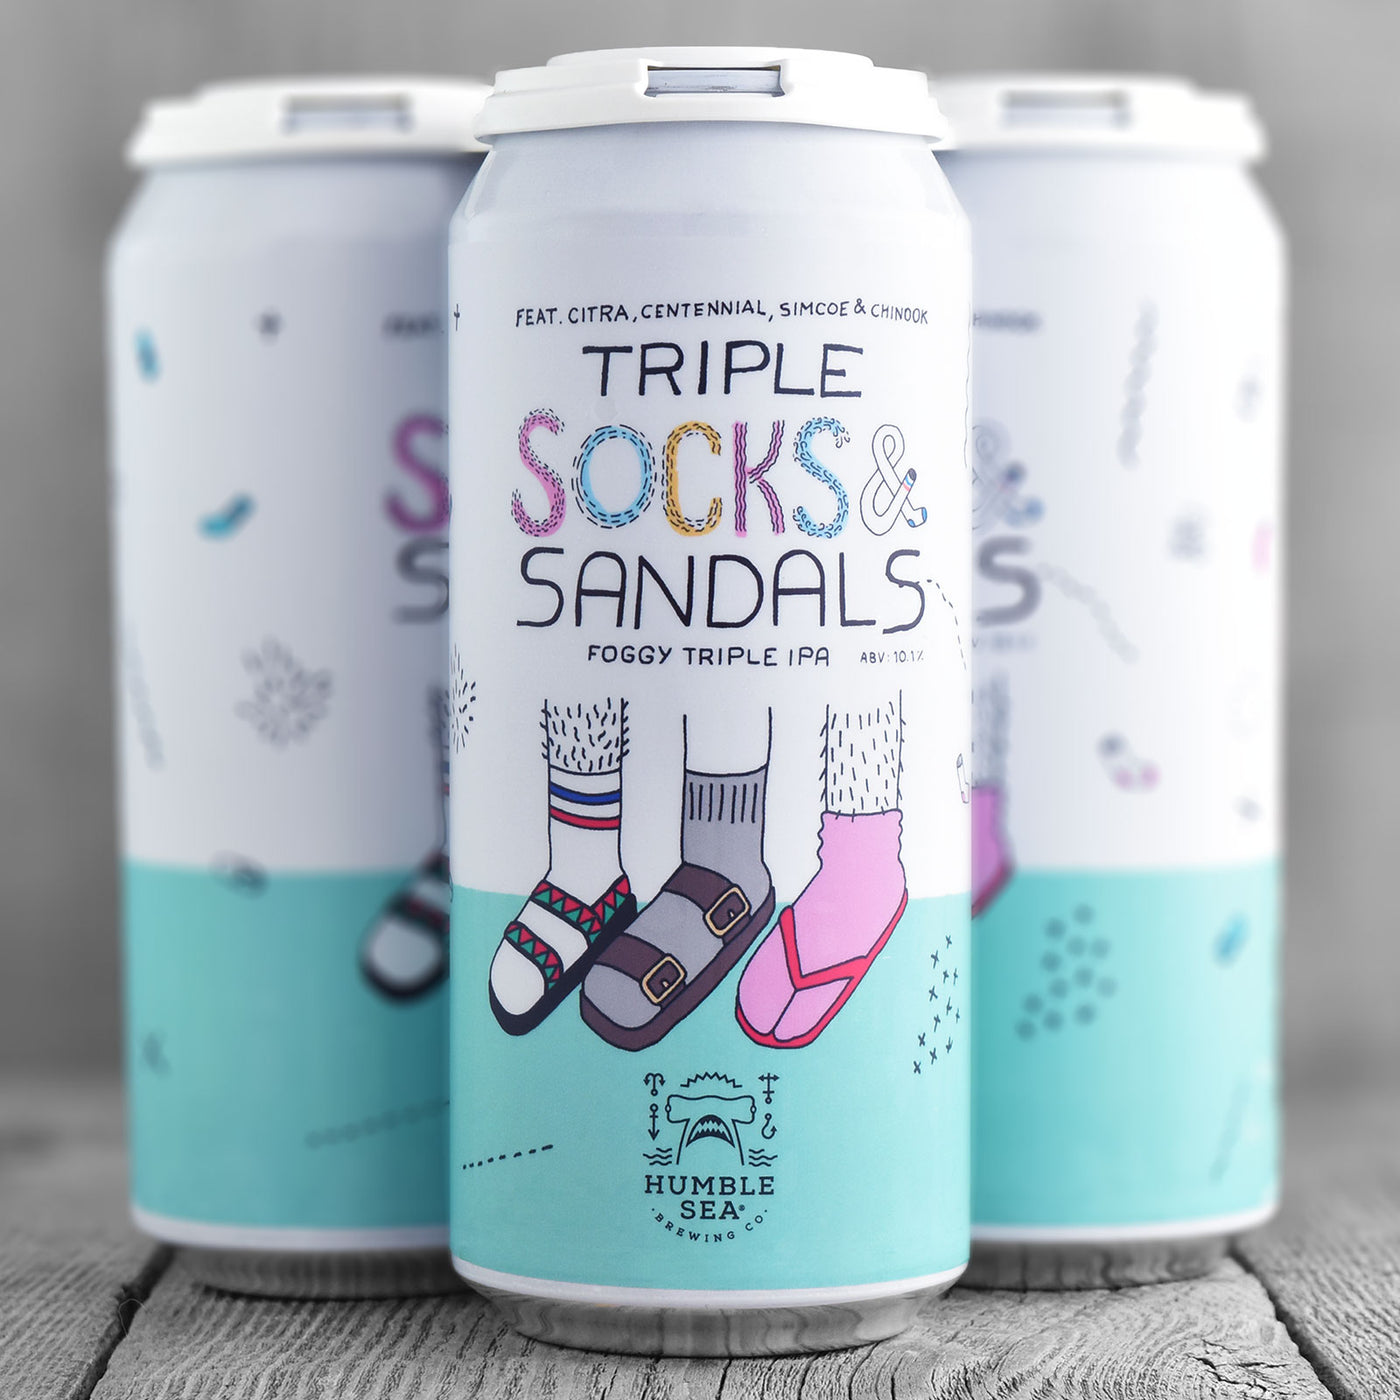 Humble Sea Triple Socks & Sandals